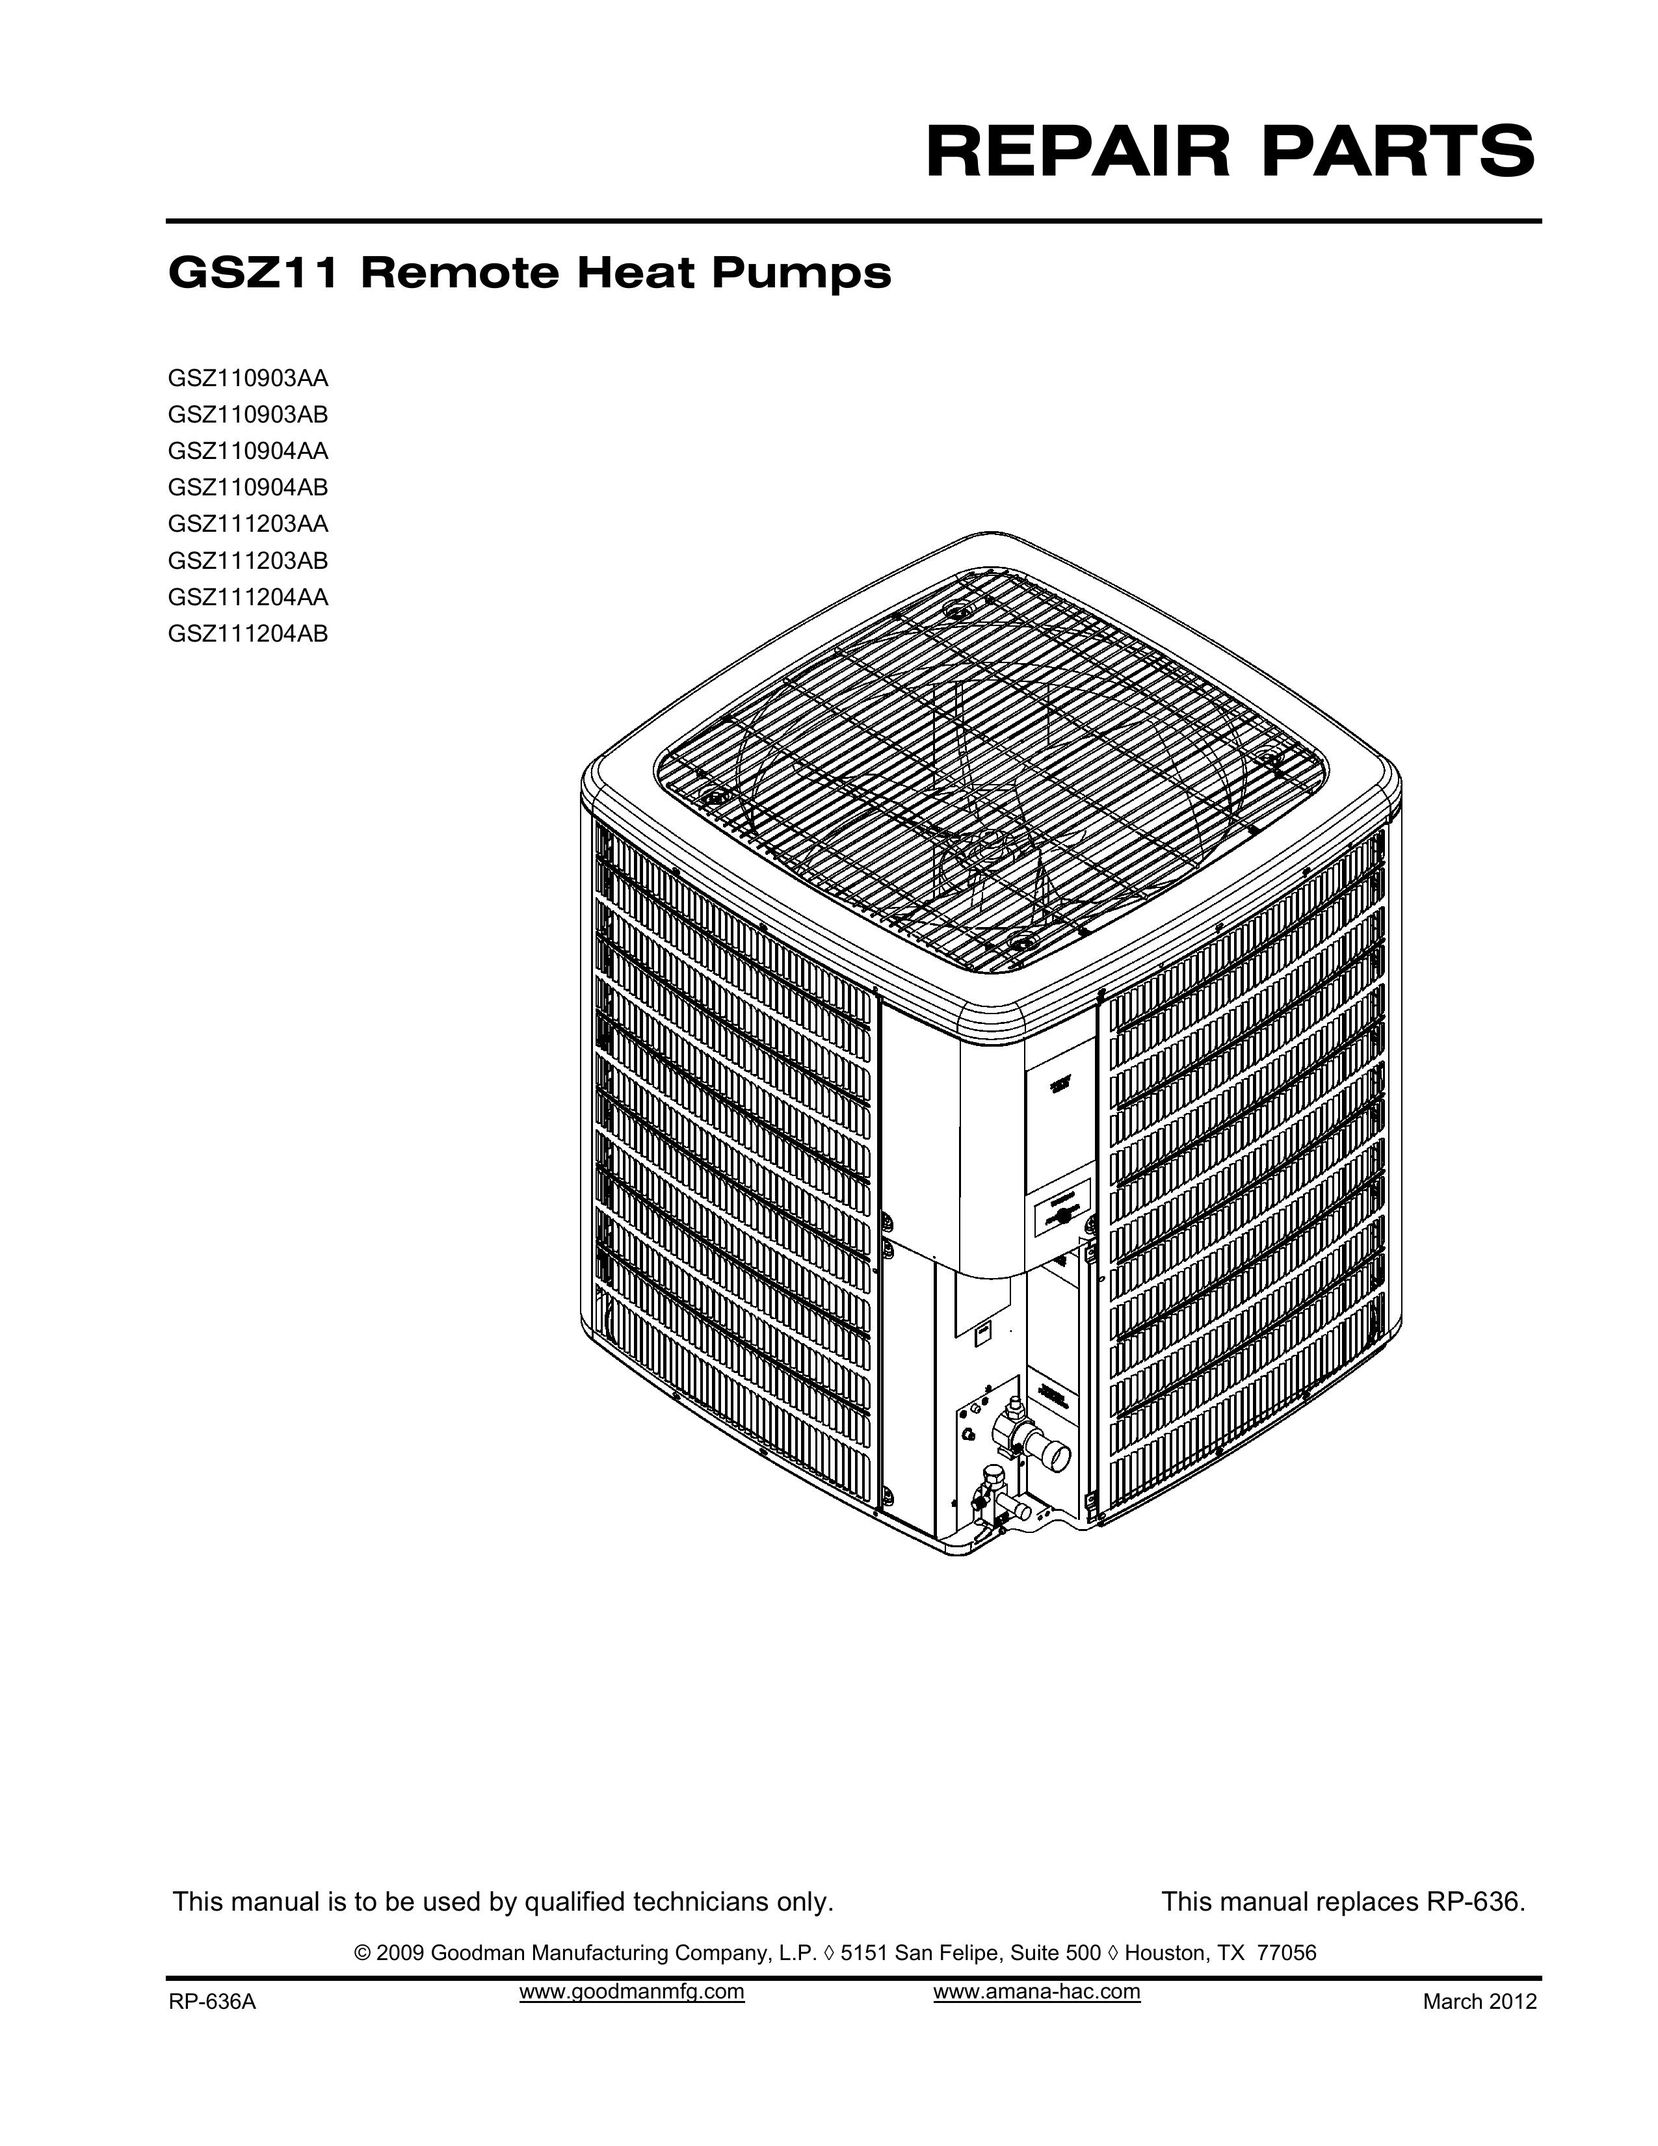 Goodman Mfg GSZ110904AB Heat Pump User Manual